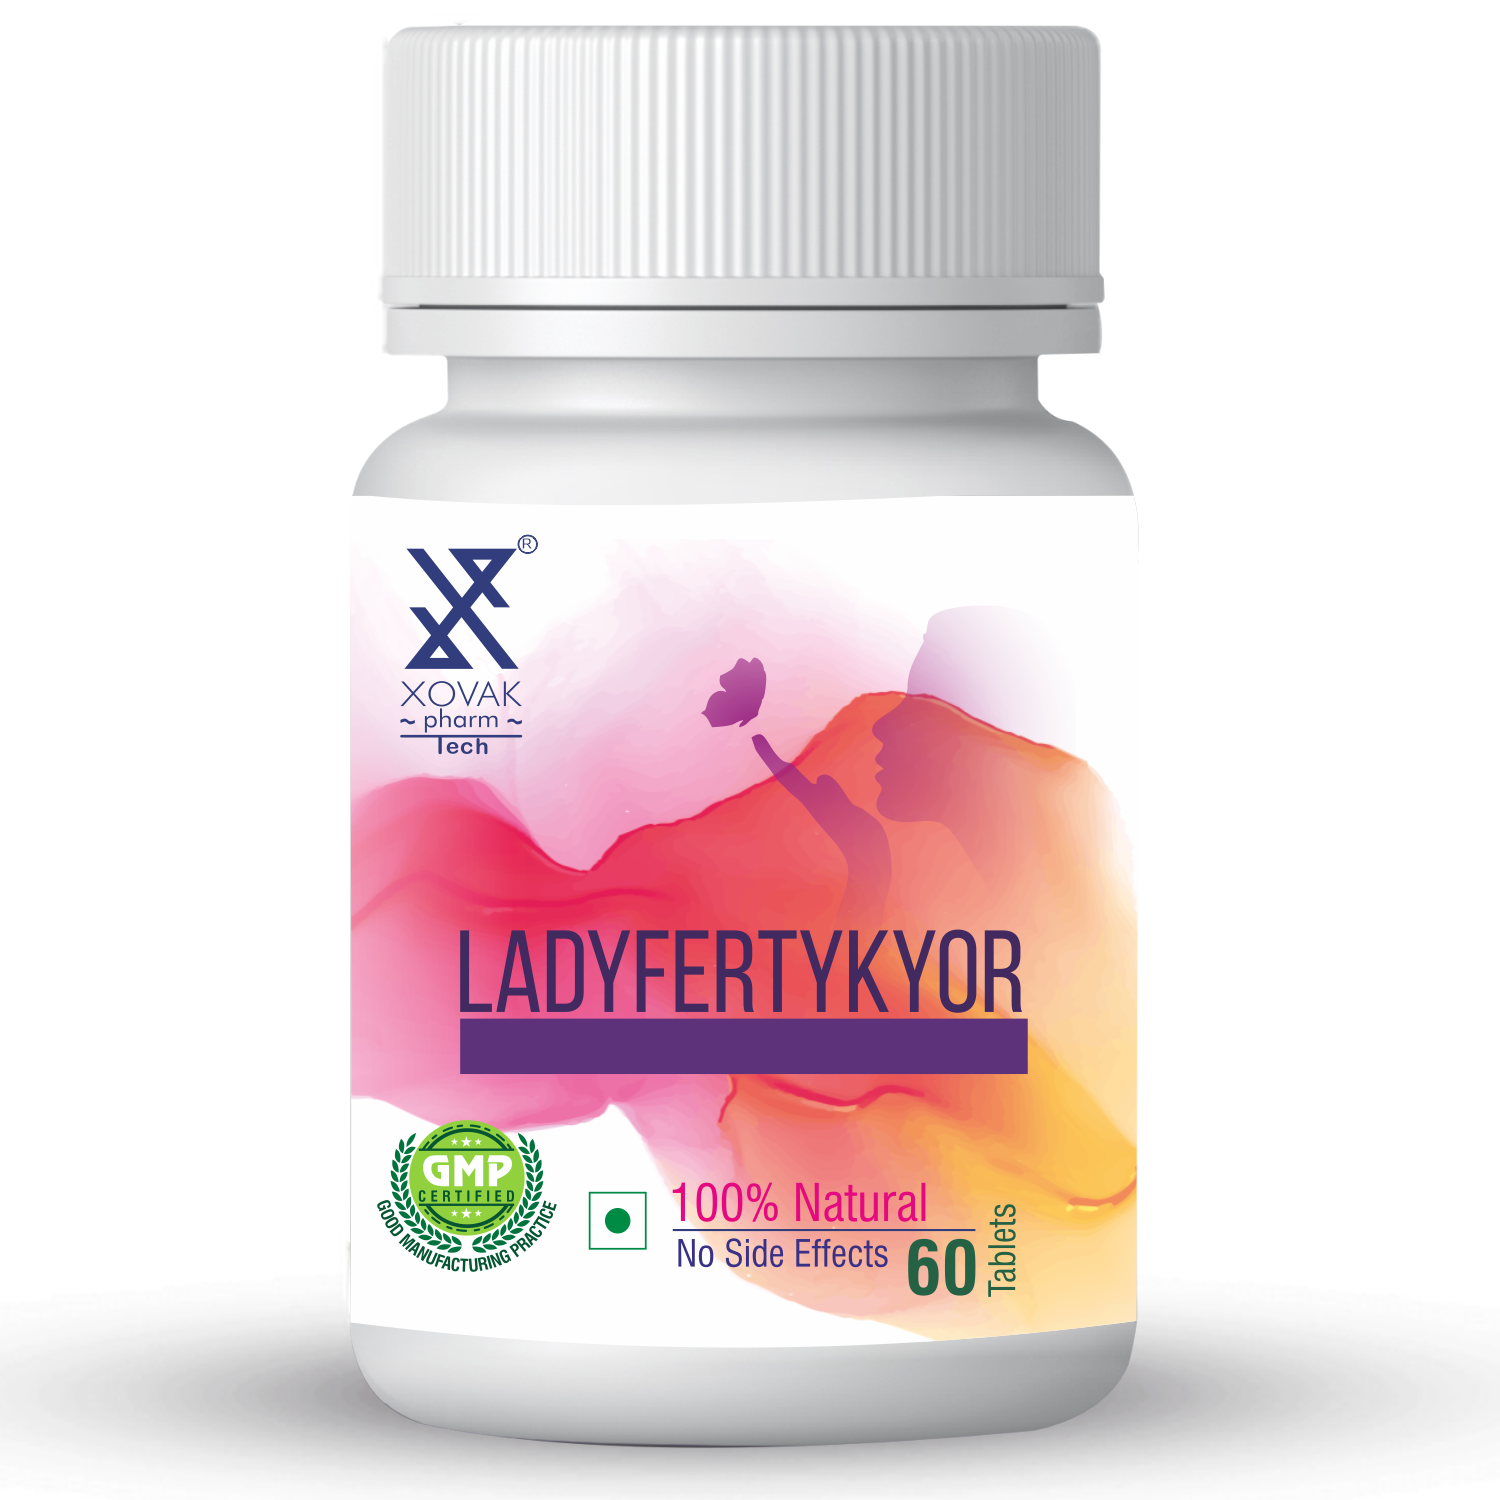 Buy Xovak Ayurvedic Ladyfertykyor for Female at Best Price Online